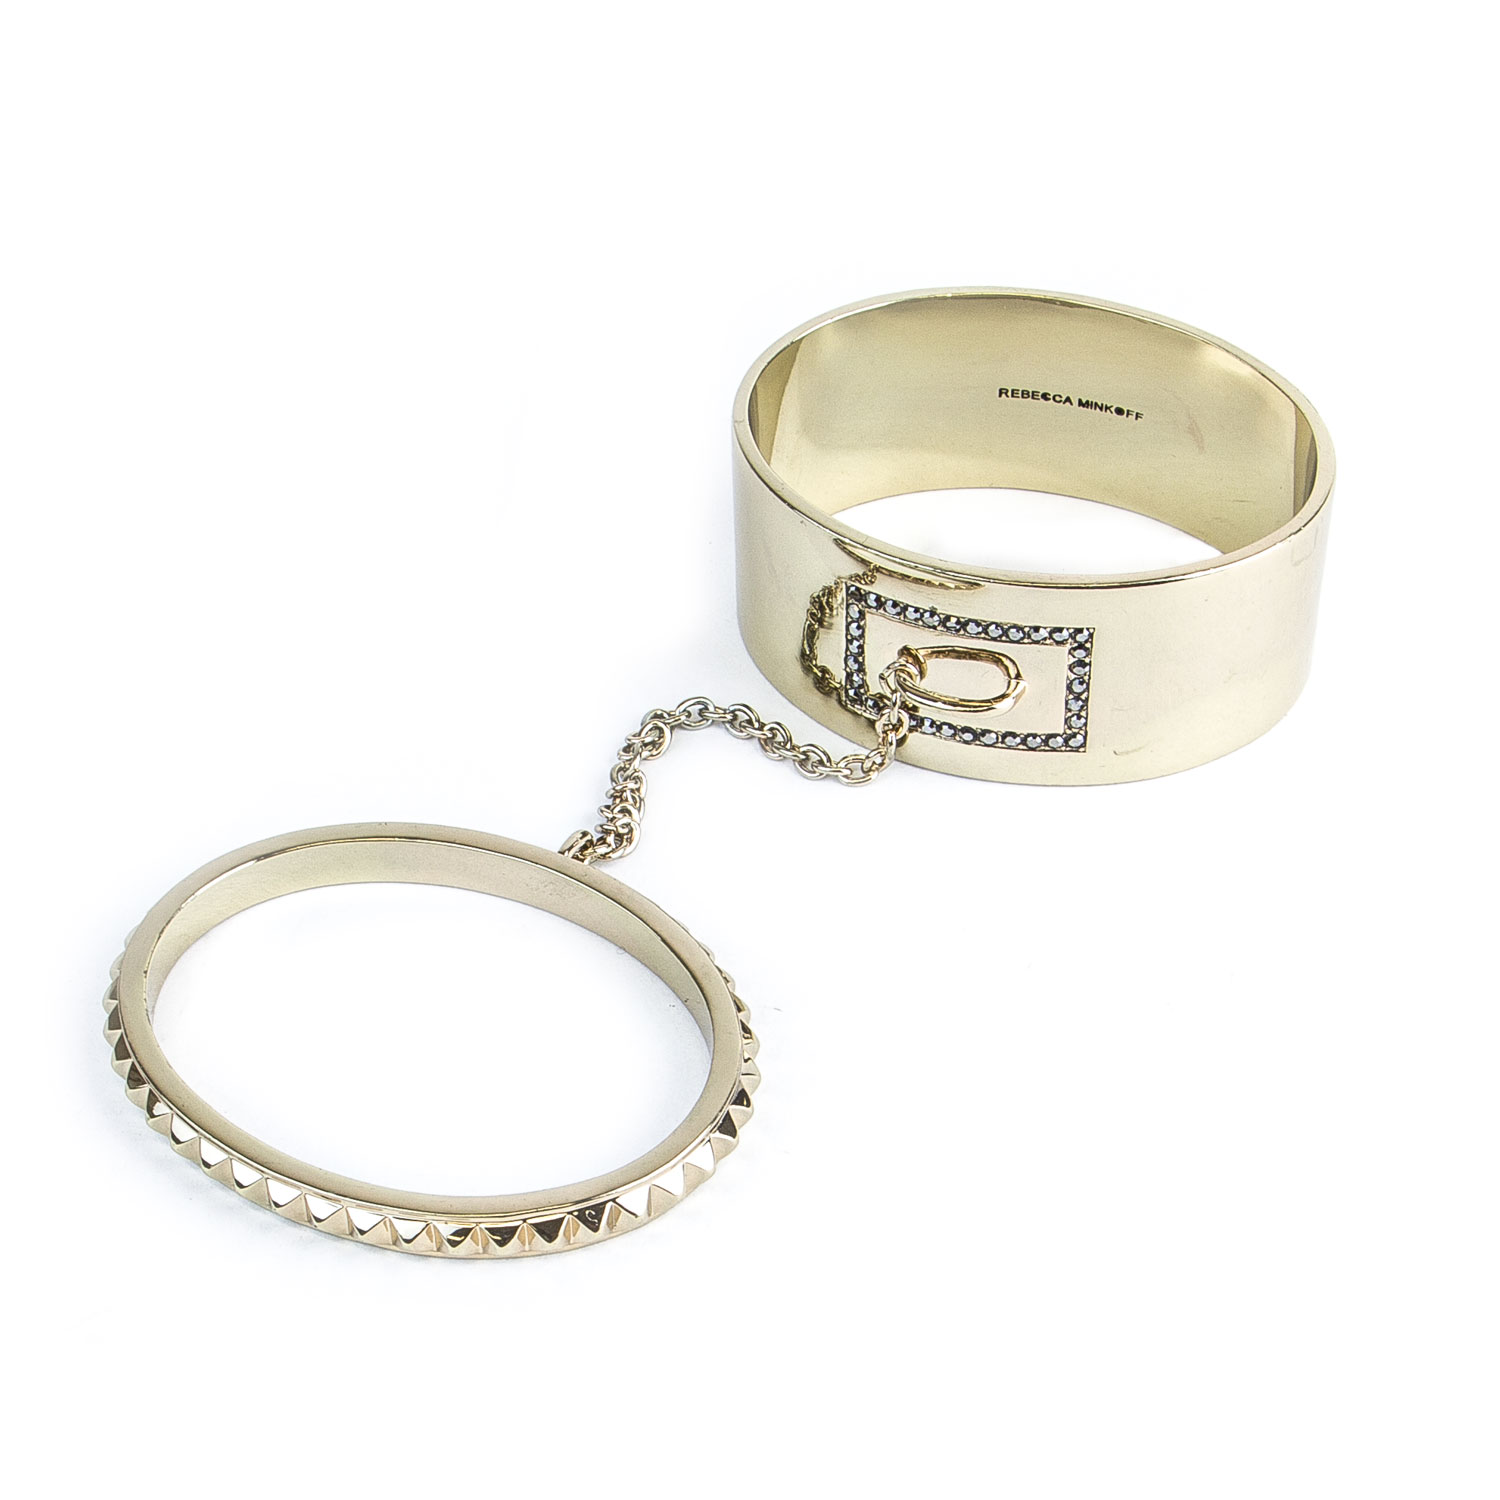 Rebecca Minkoff Light Gold Pave Double Chain Bangle Bracelet $148